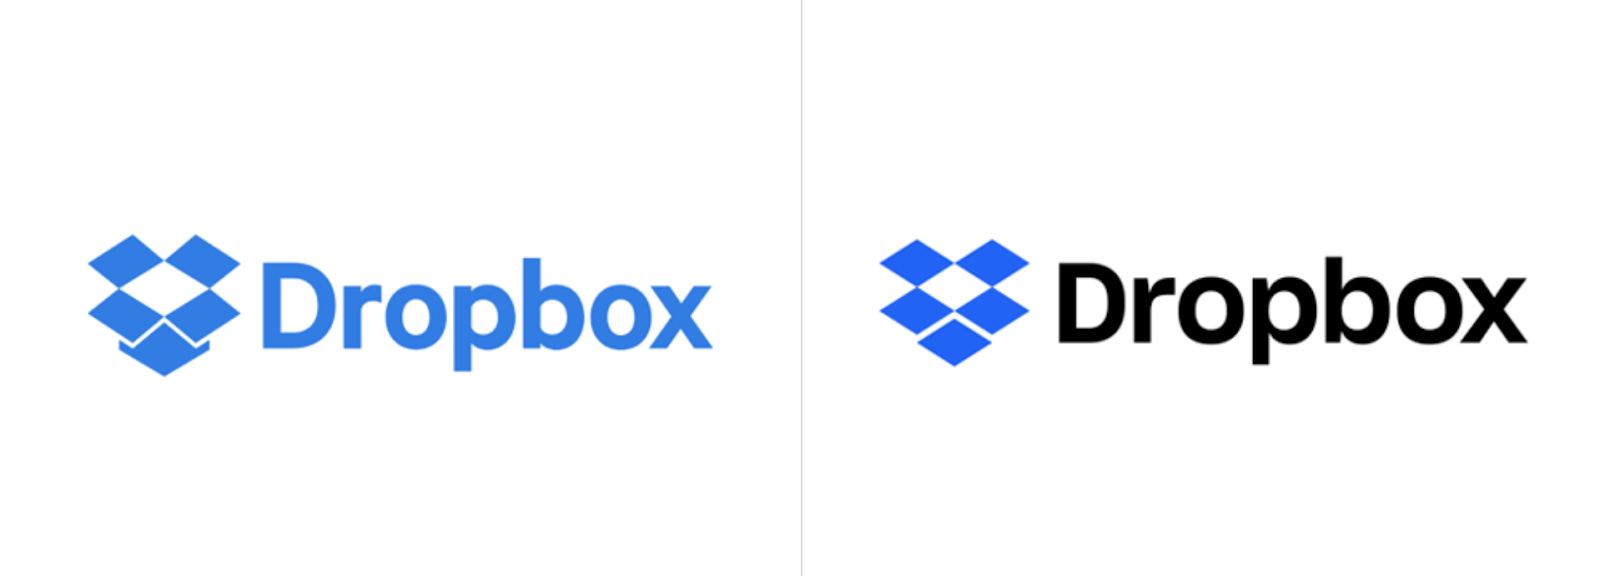 dropbox-redesign-logo